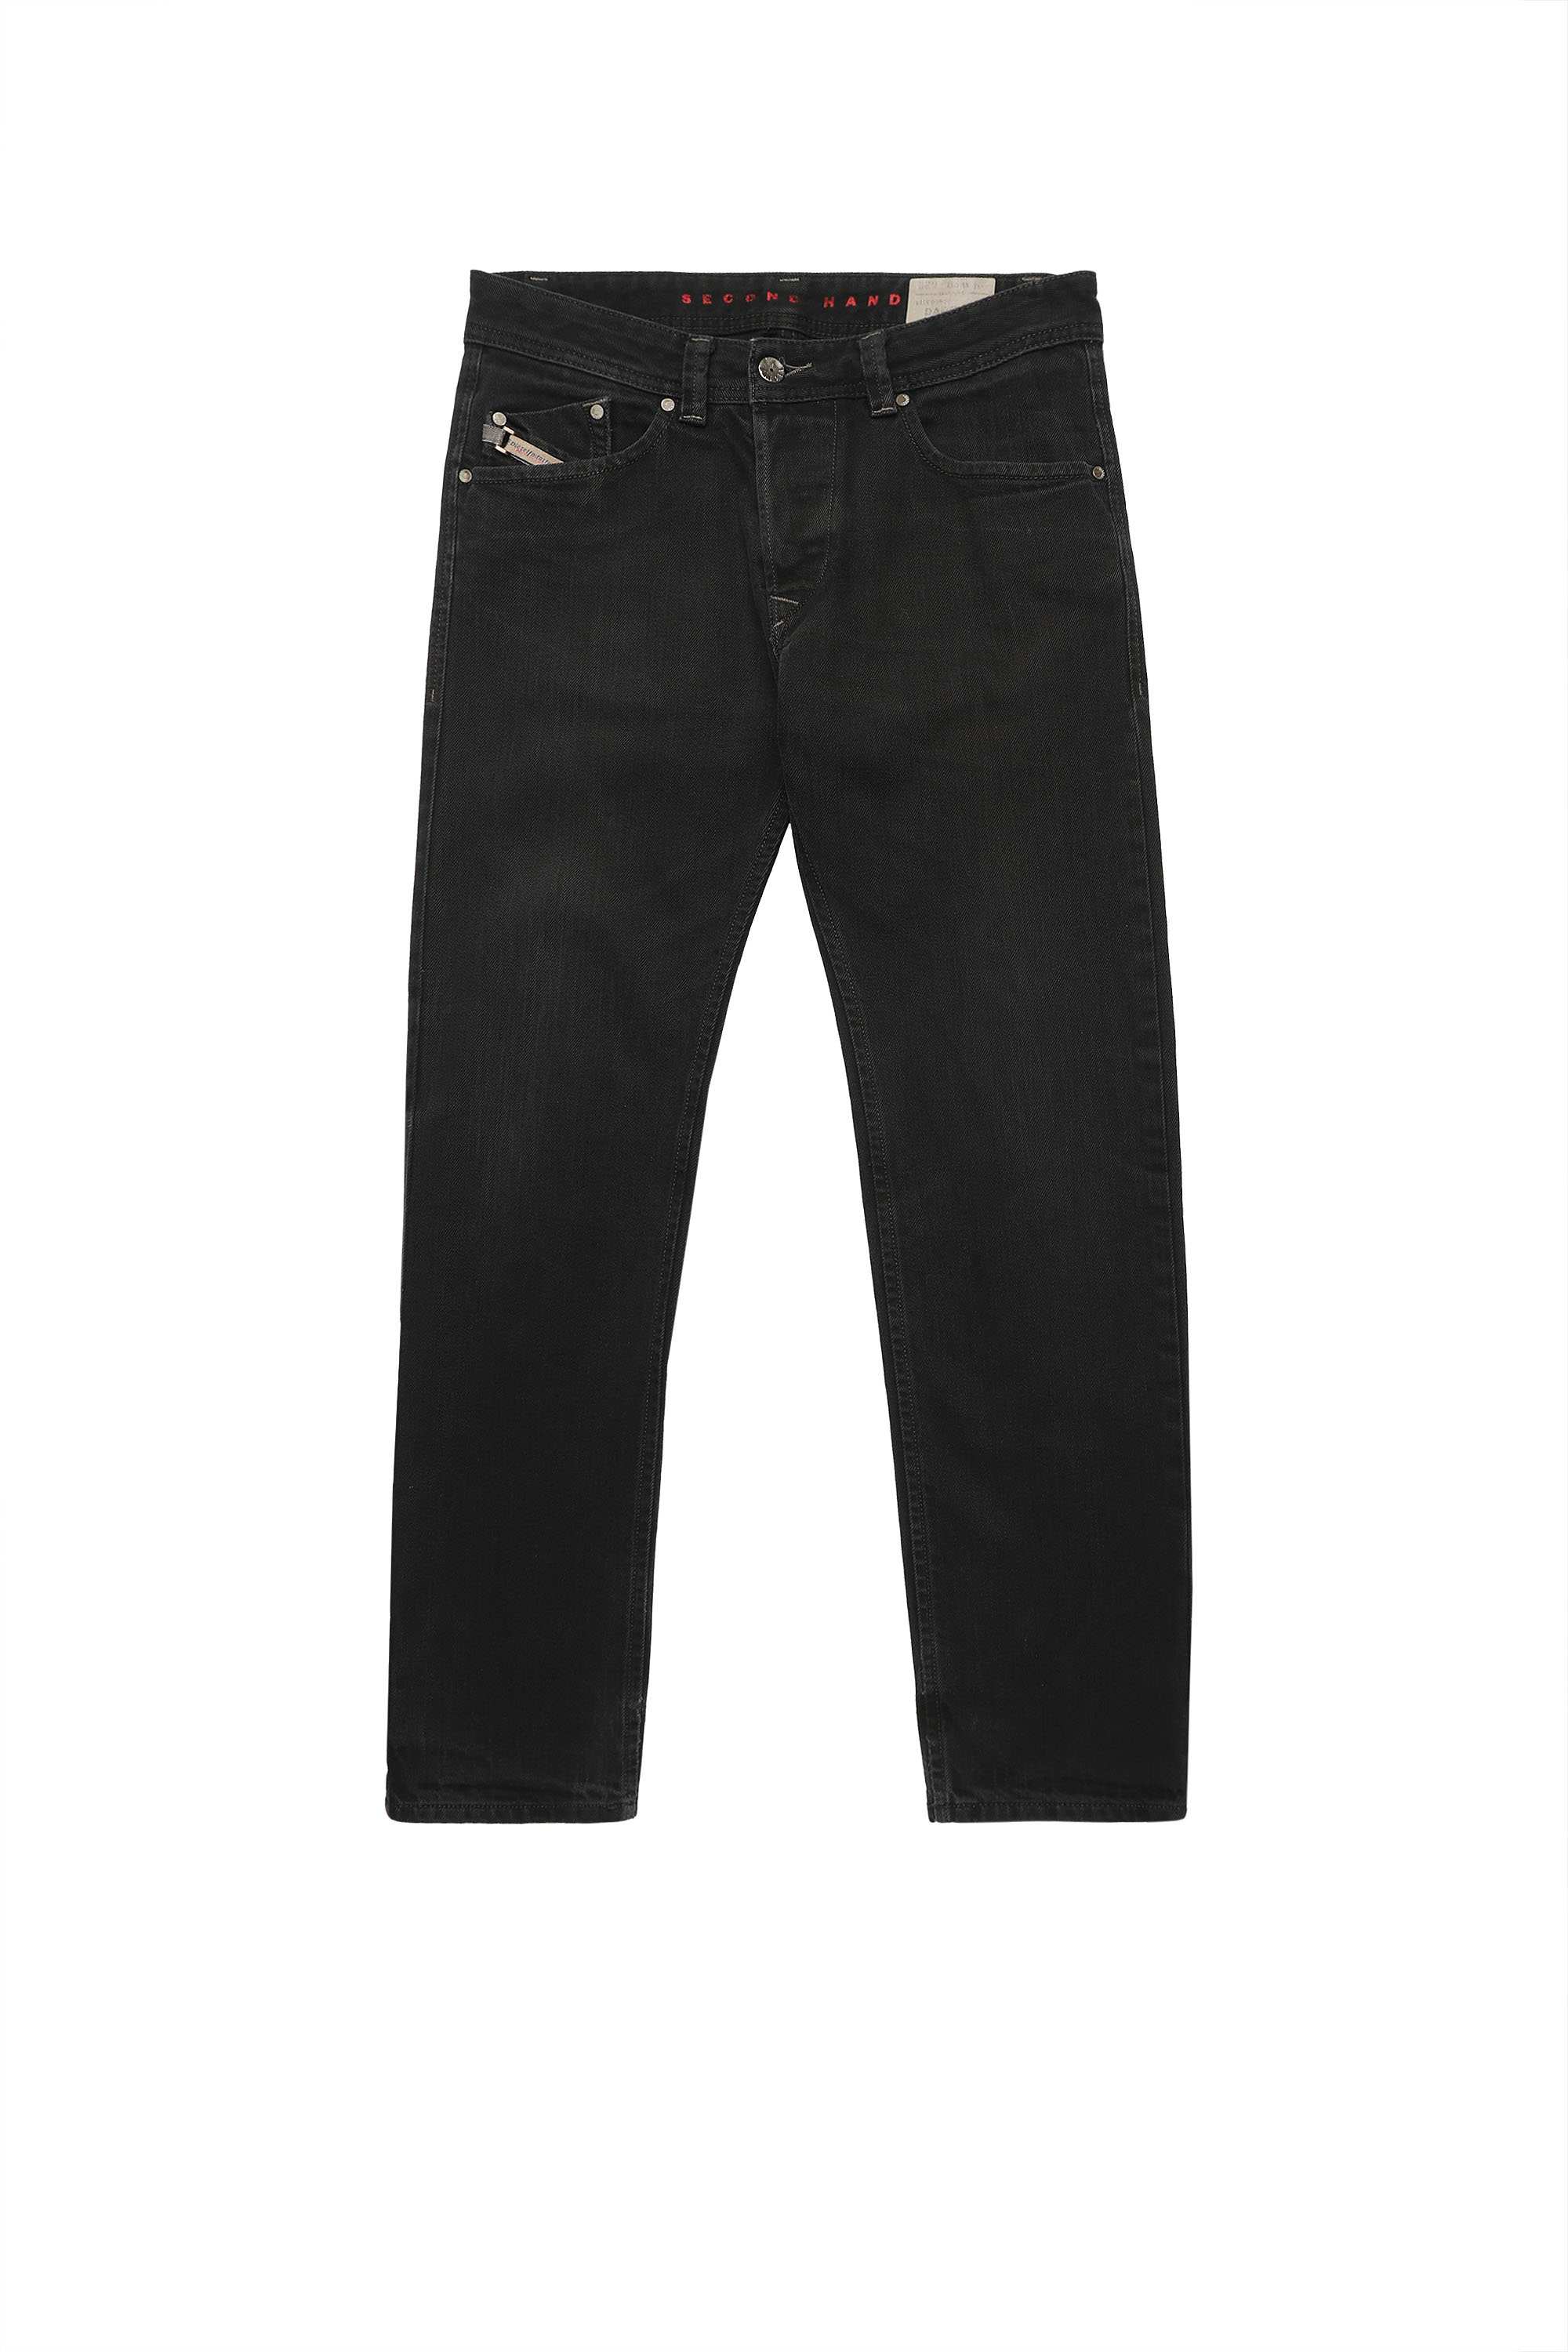 DARRON, Black/Dark grey - Jeans